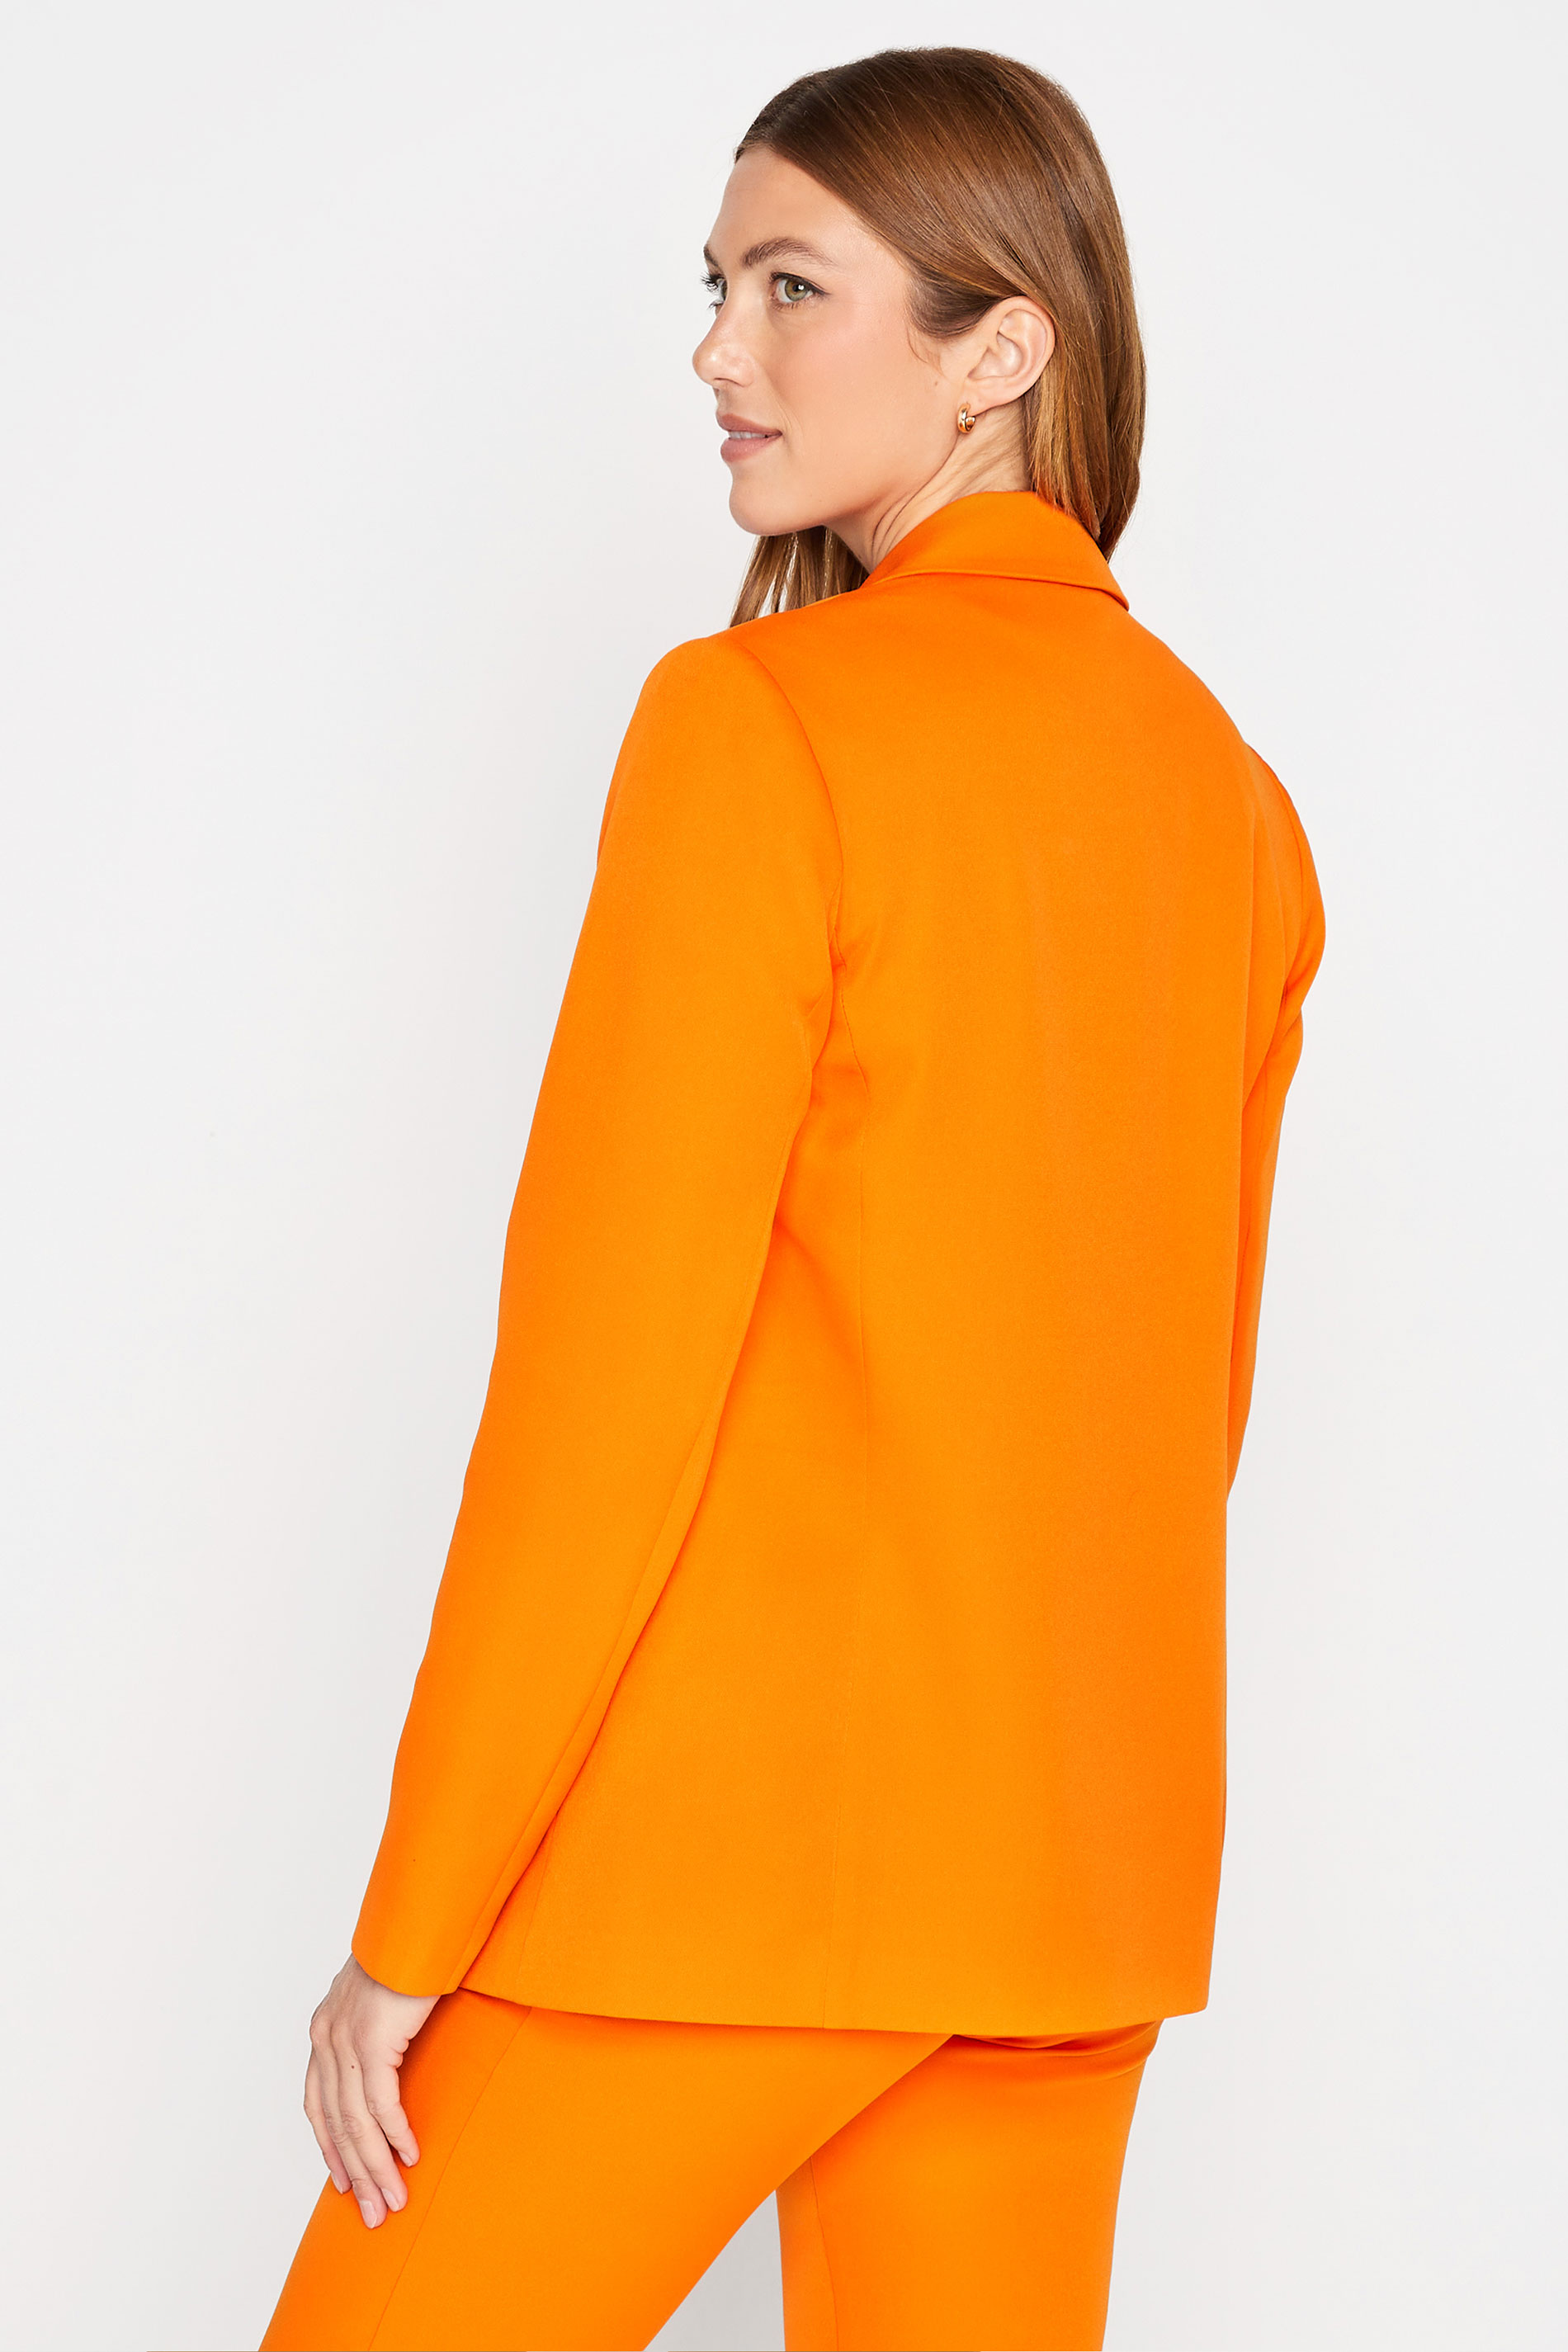 LTS Tall Women's Orange Tailored Blazer | Long Tall Sally  3